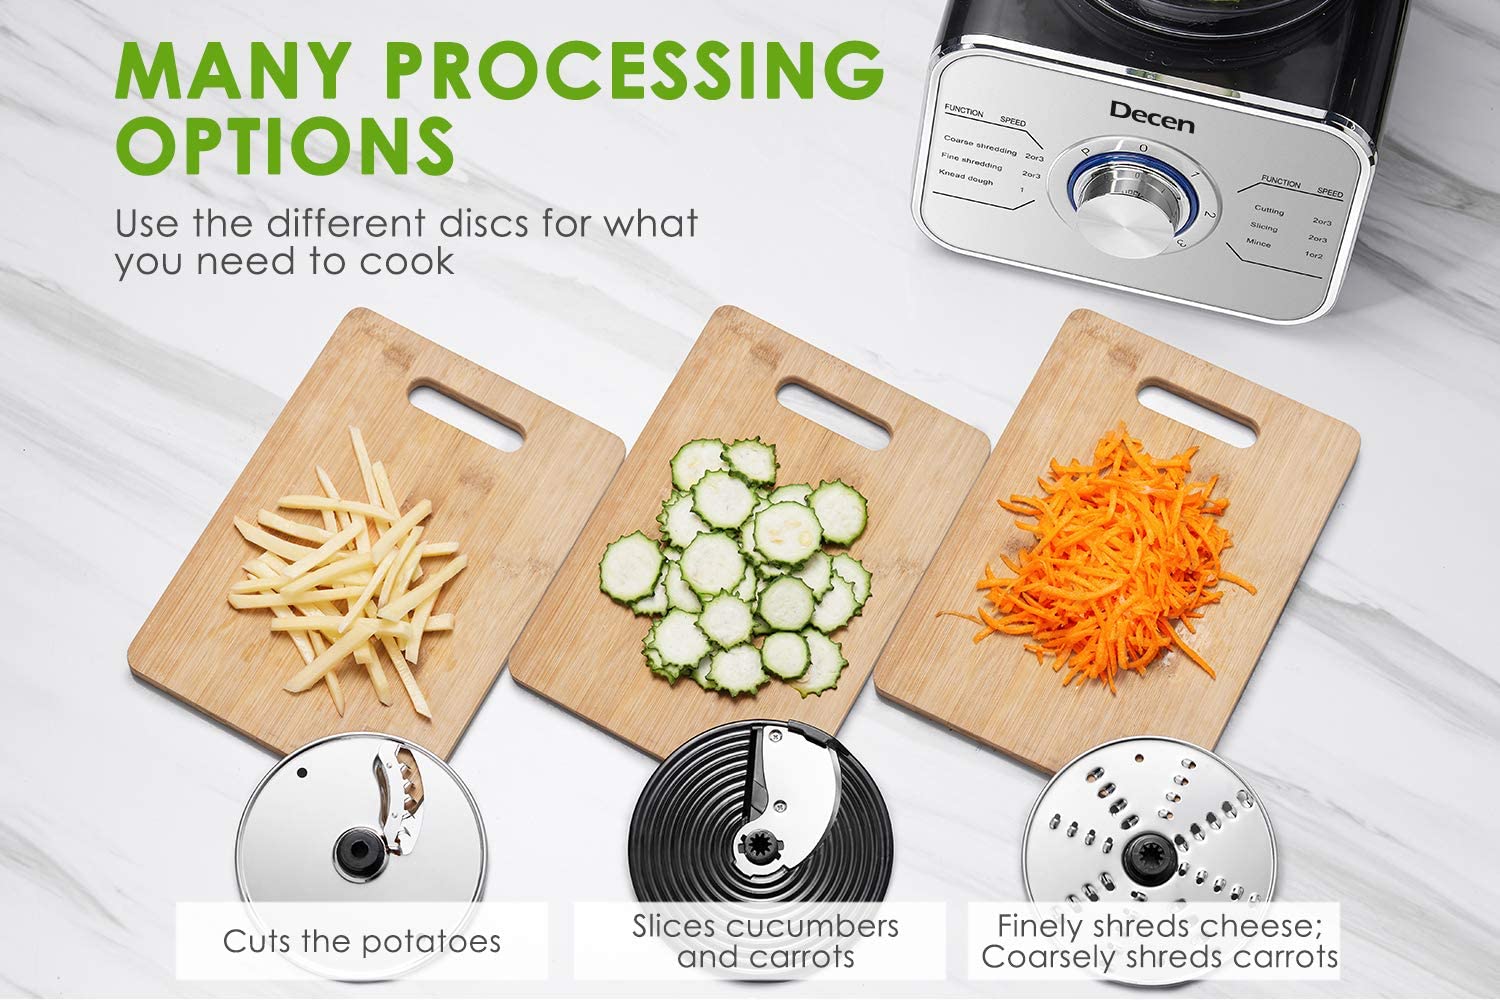 Professional Food Processor for Chopping, Slicing, Shredding – AICOOK